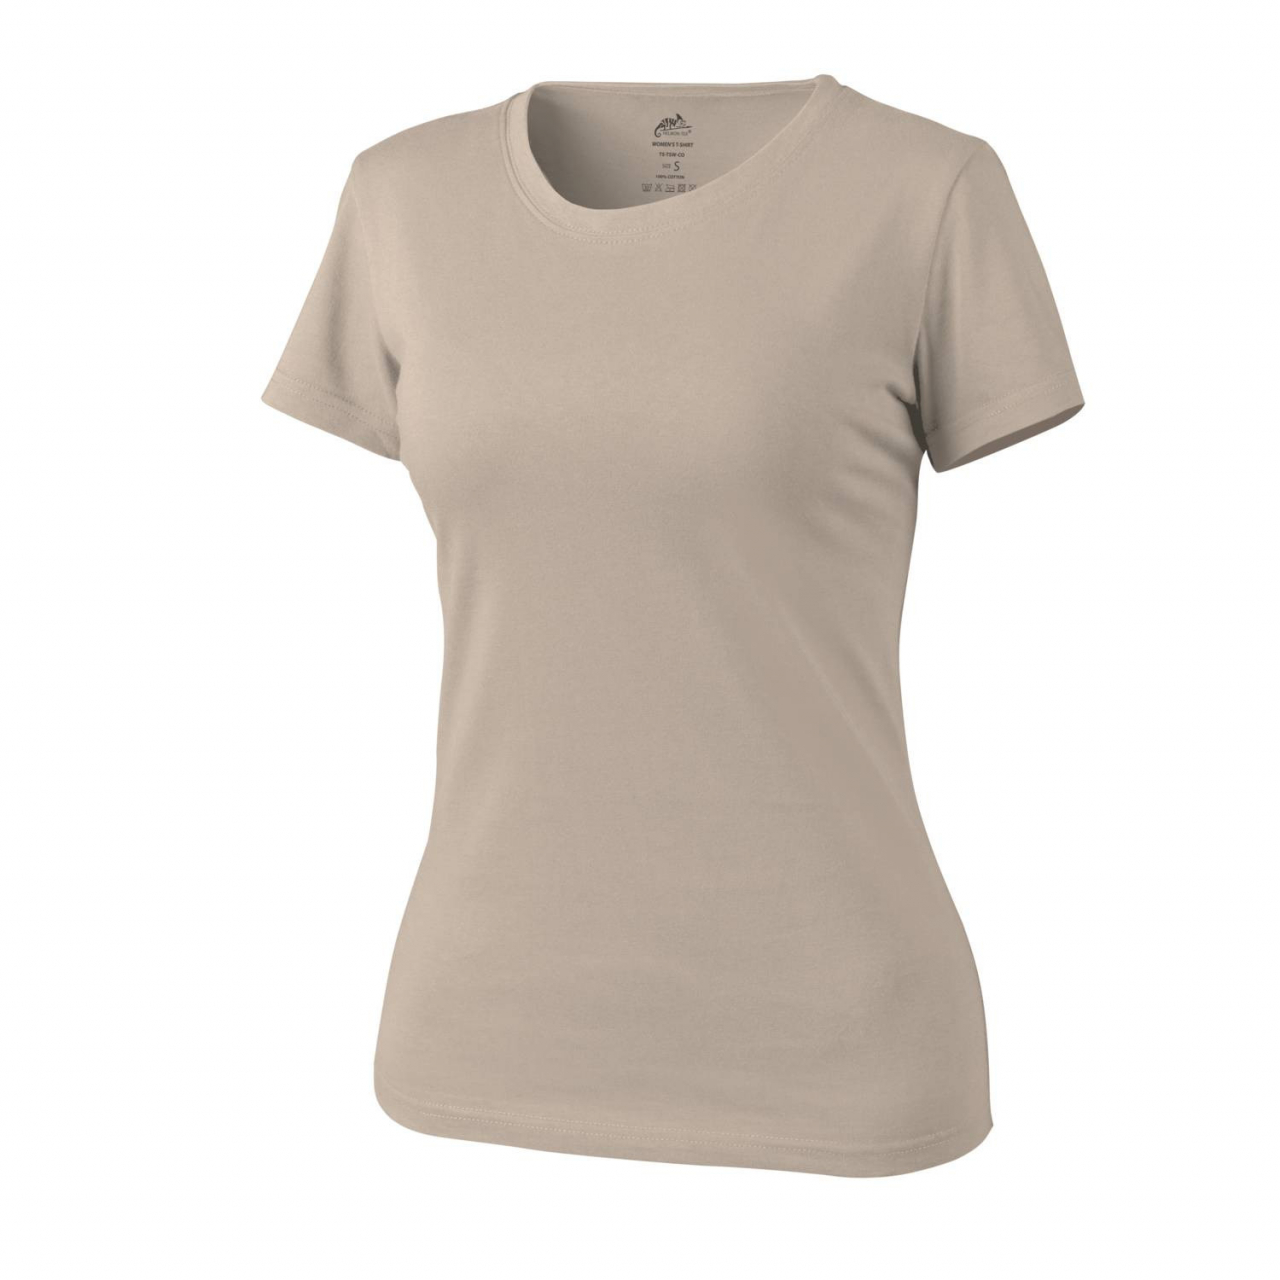 Tričko dámské Helikon Womens Shirt - béžové, XS